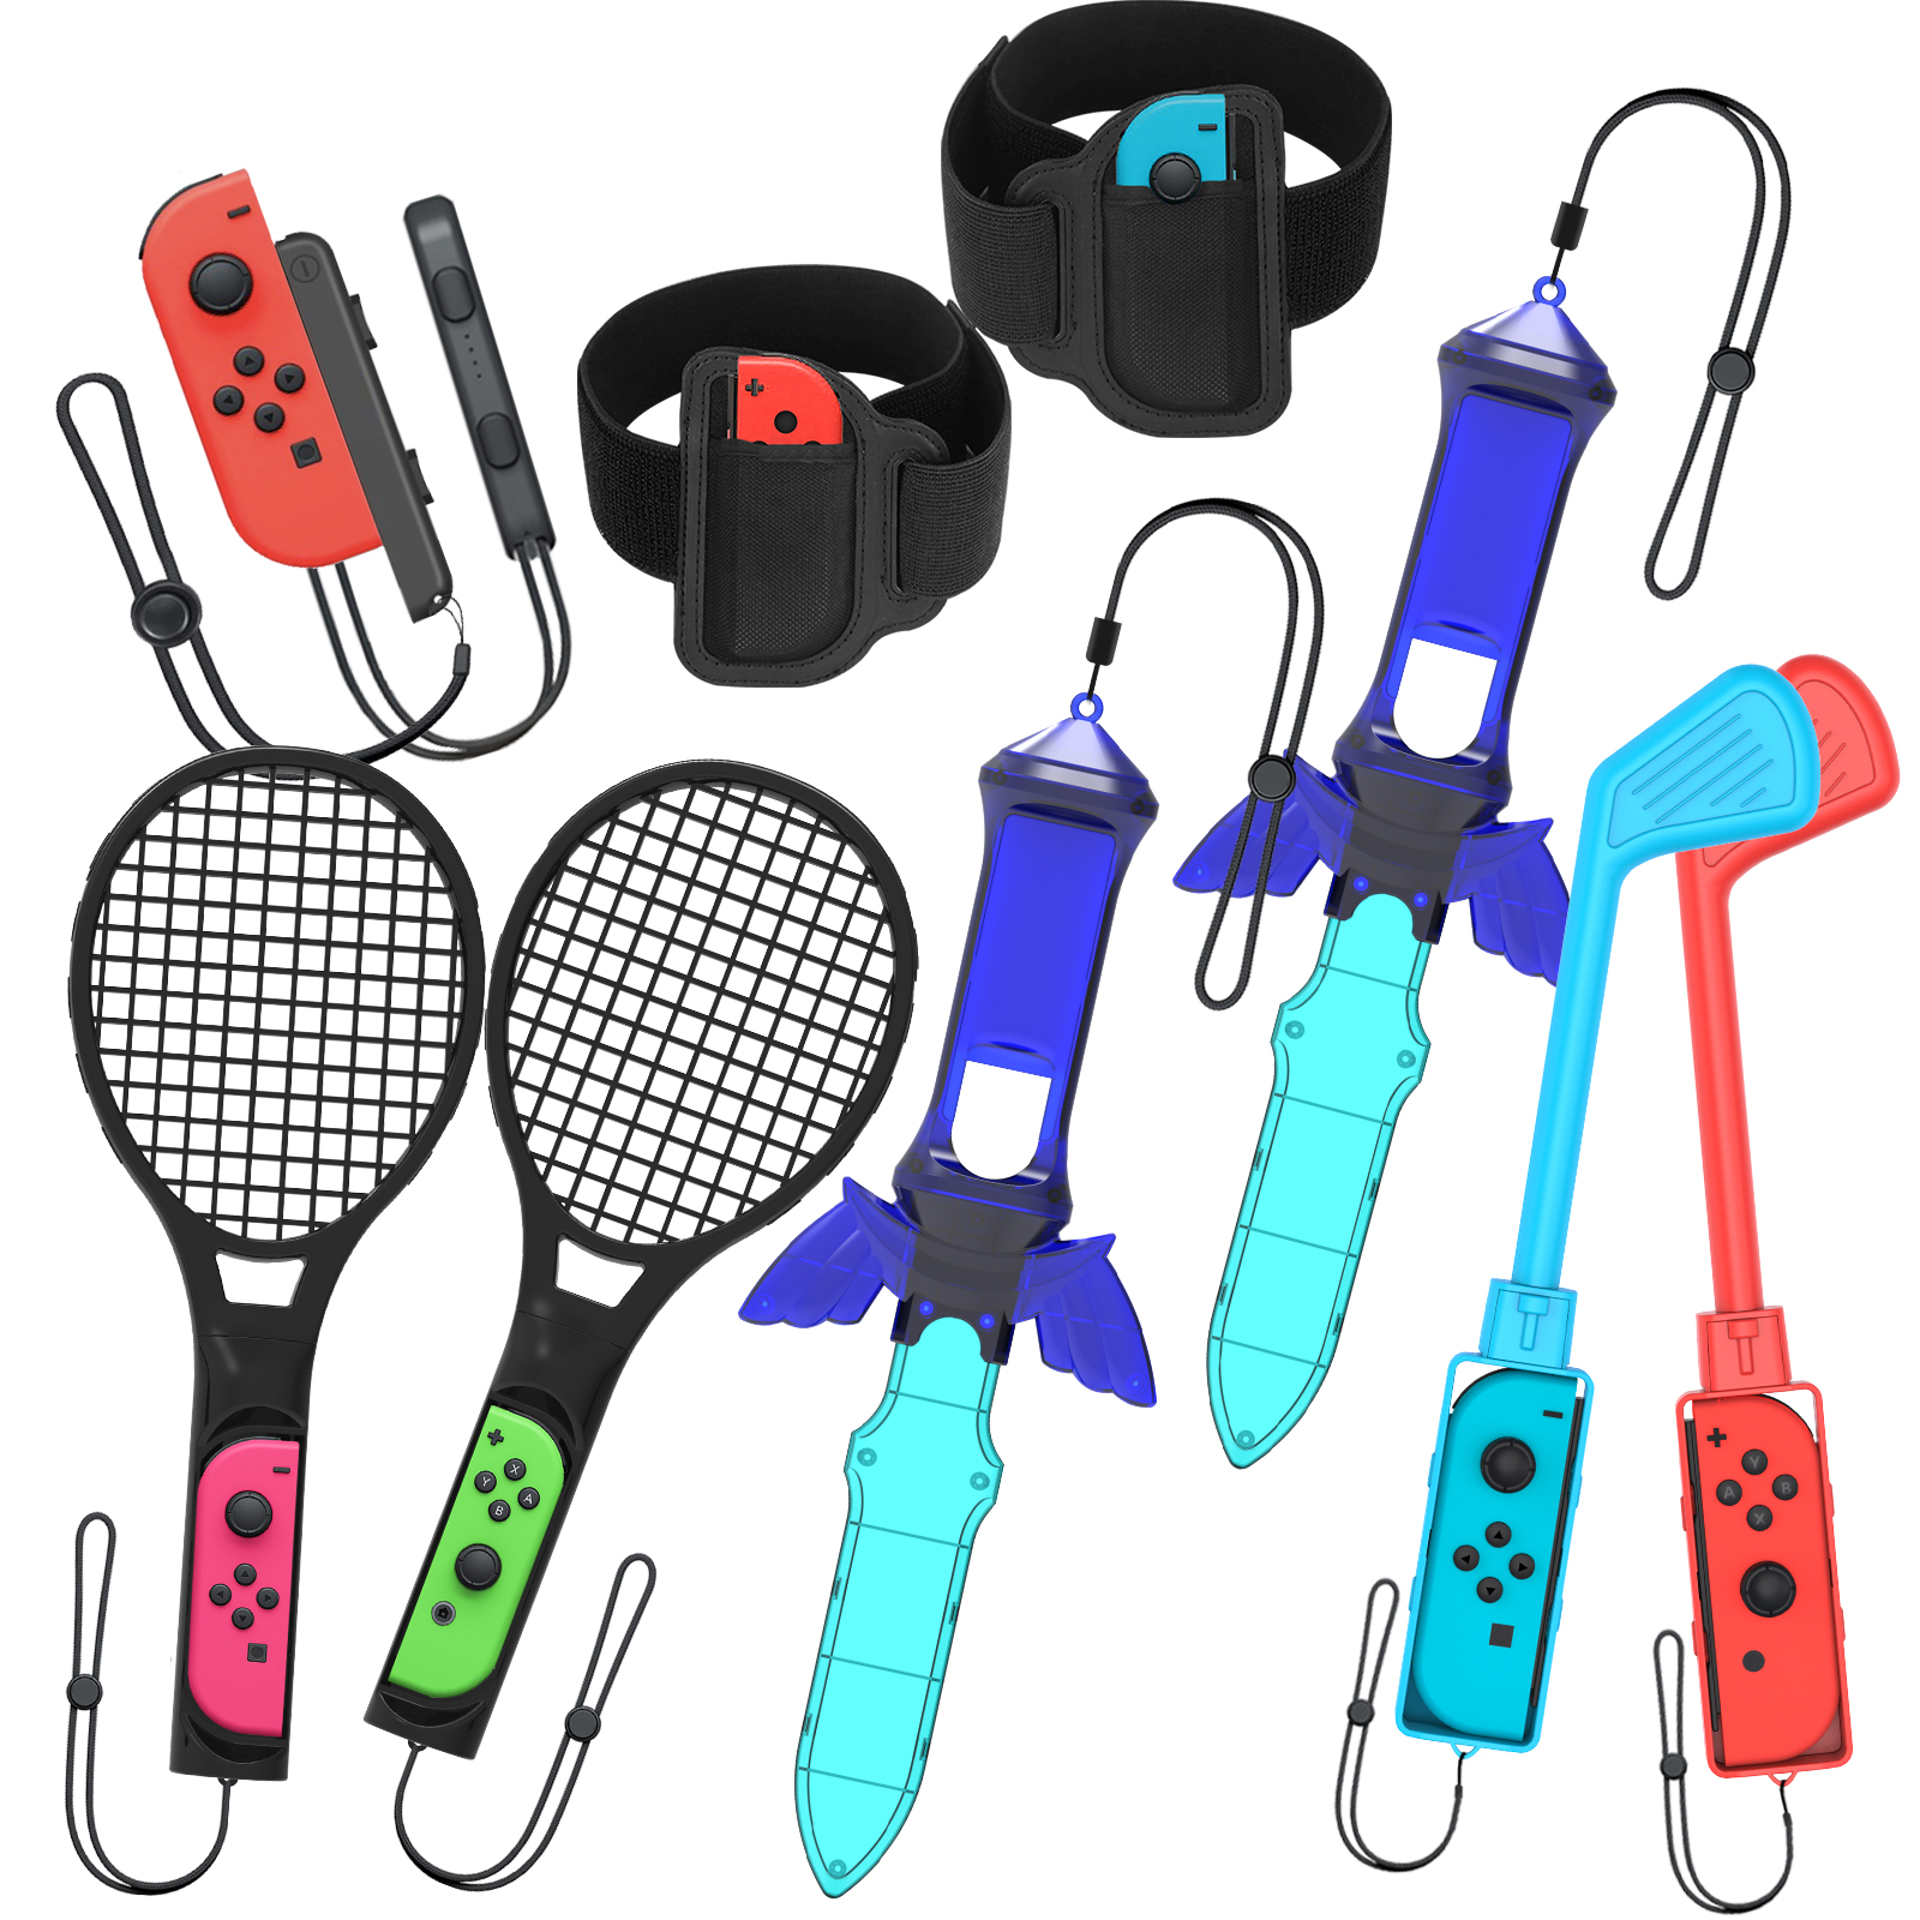 Nintendo Switch Sports Mega Bundle Pack